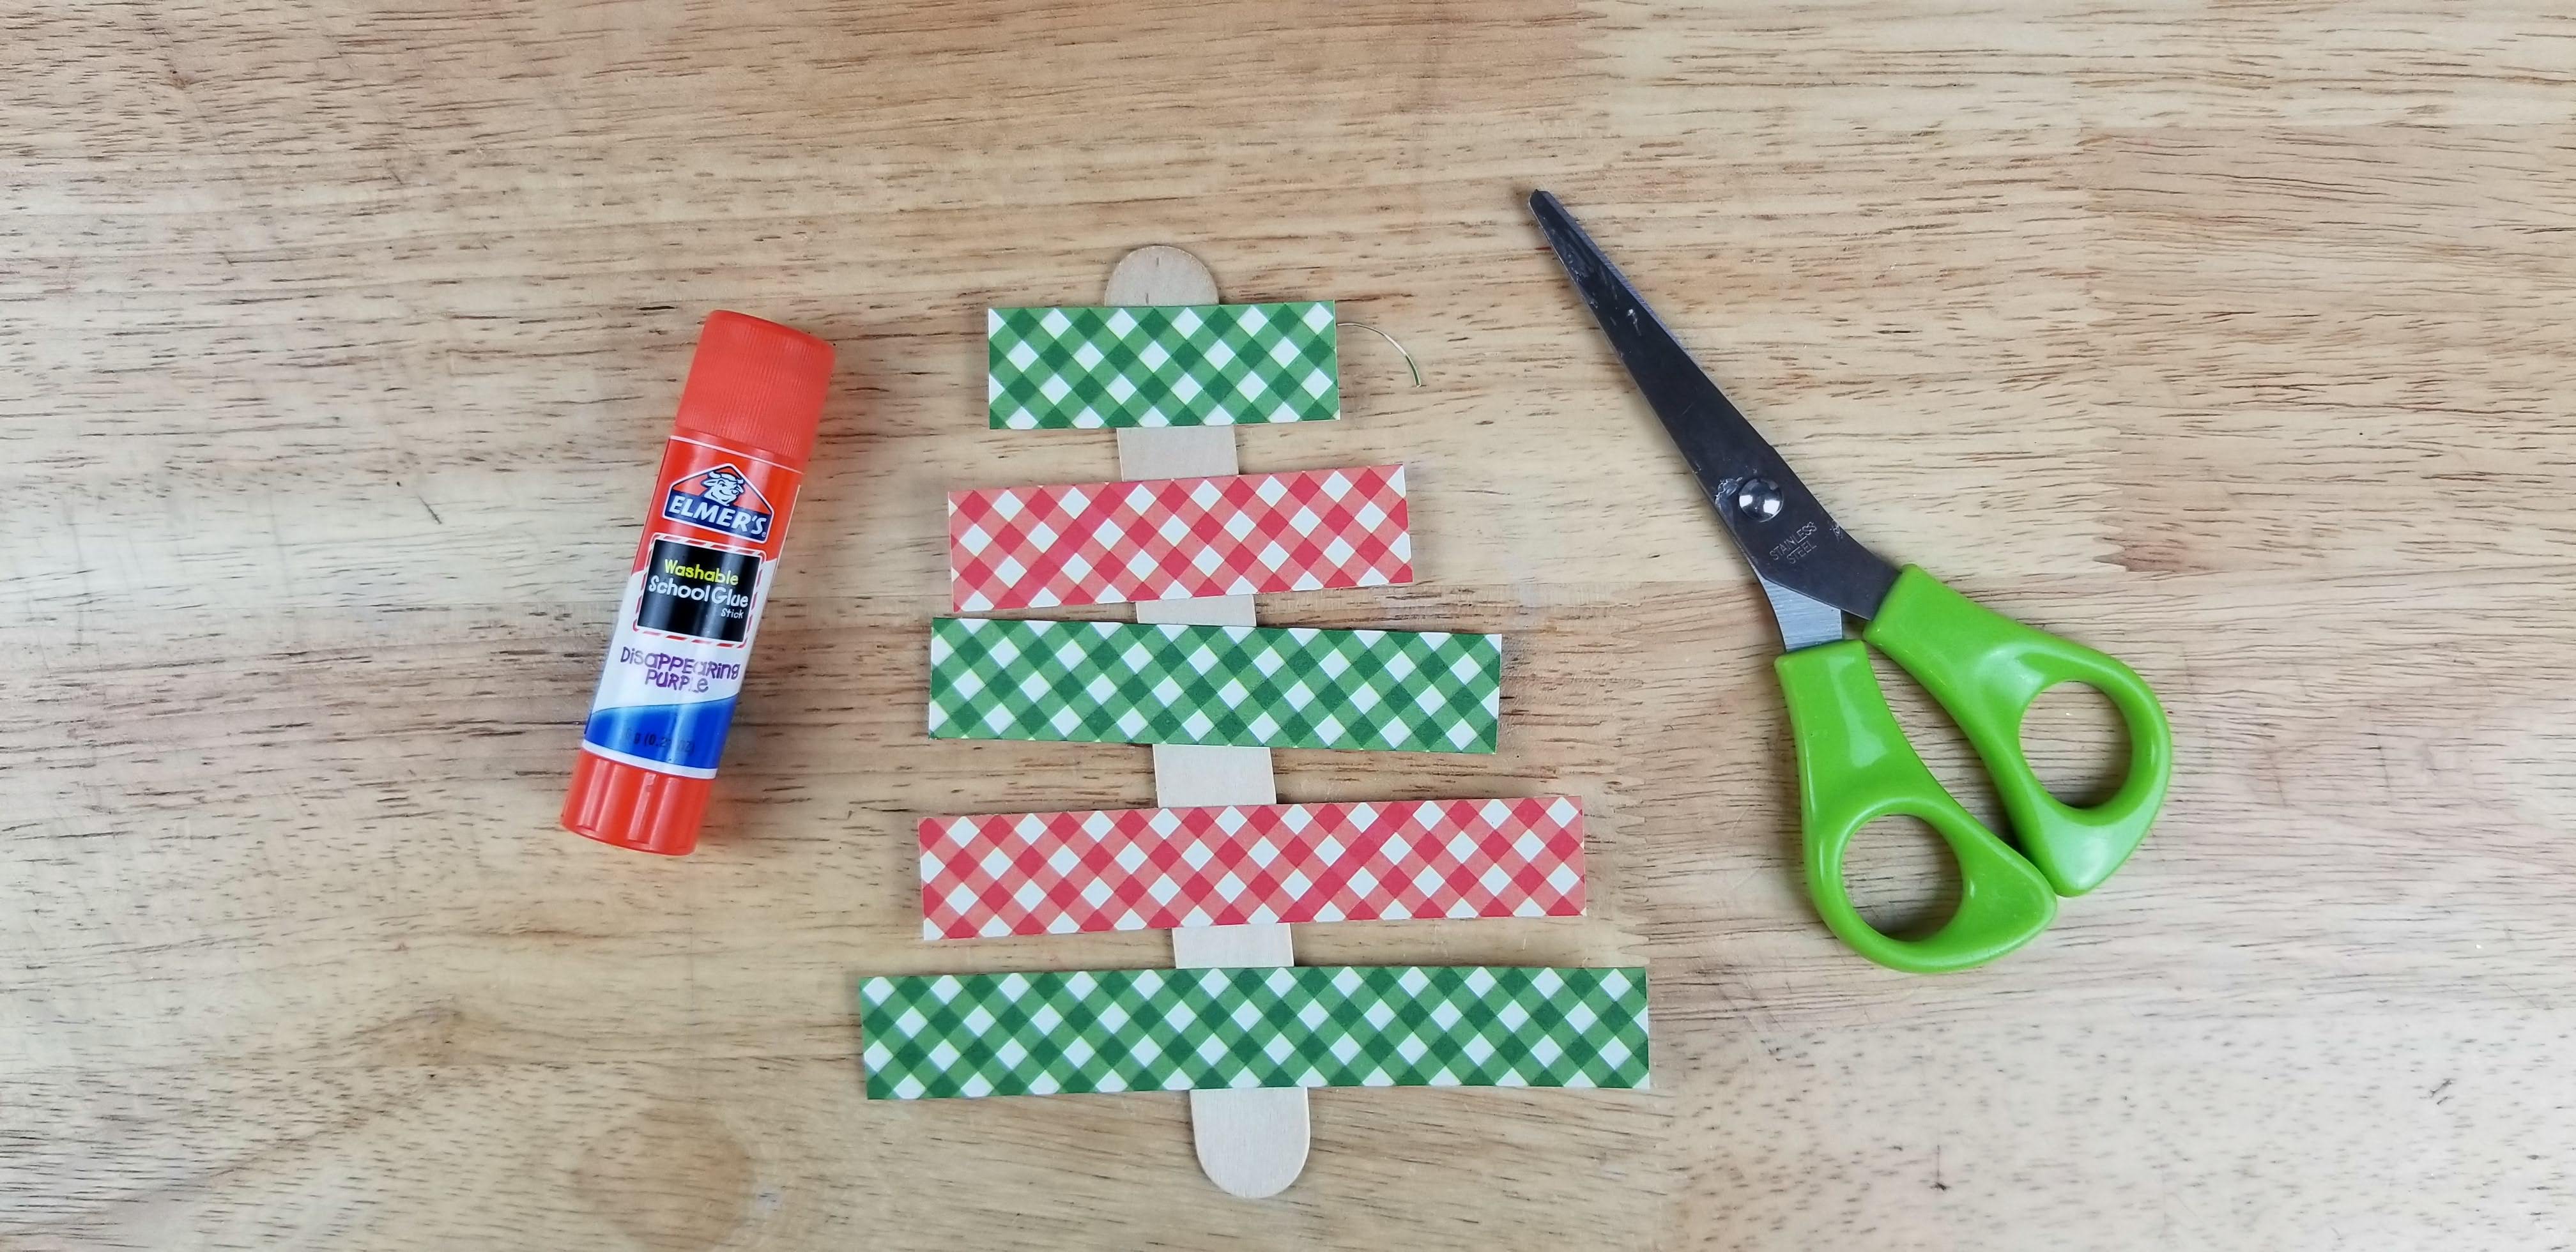 Christmas Solid Glues Sticks All Purpose White Gluesticks School Glues  Sticks for Scrapbooking School Art Craft Project - AliExpress